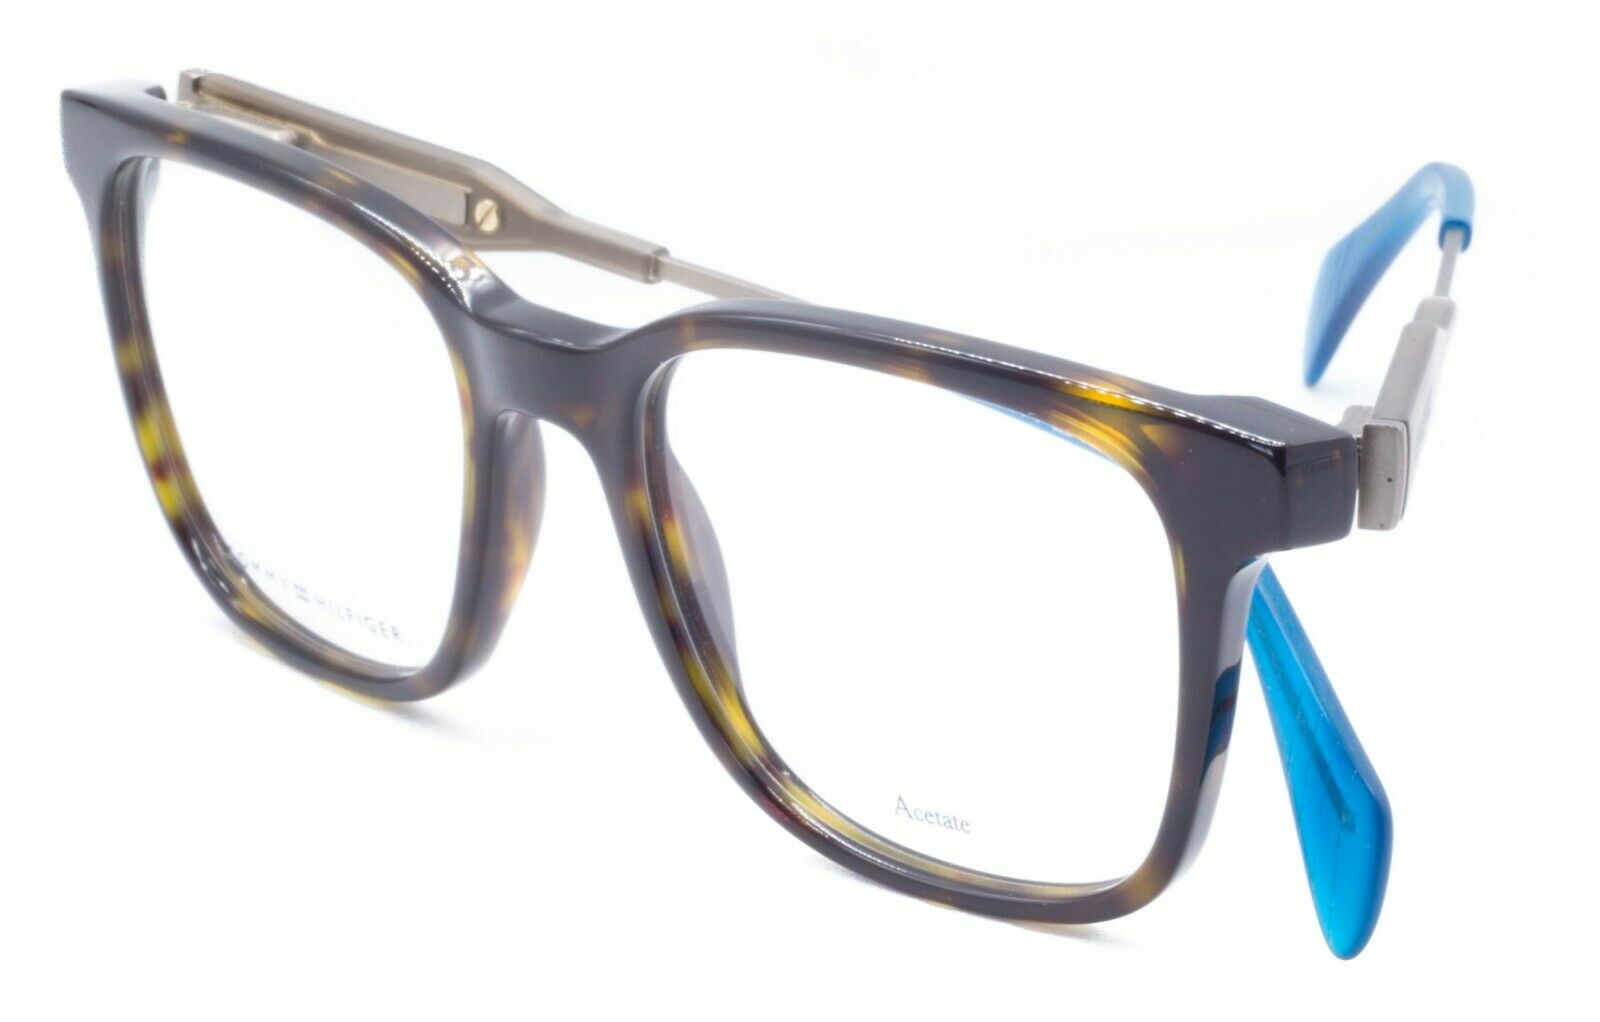 TOMMY HILFIGER TH 1351 JX4 50mm Eyewear FRAMES Glasses RX Optical Eyeglasses New